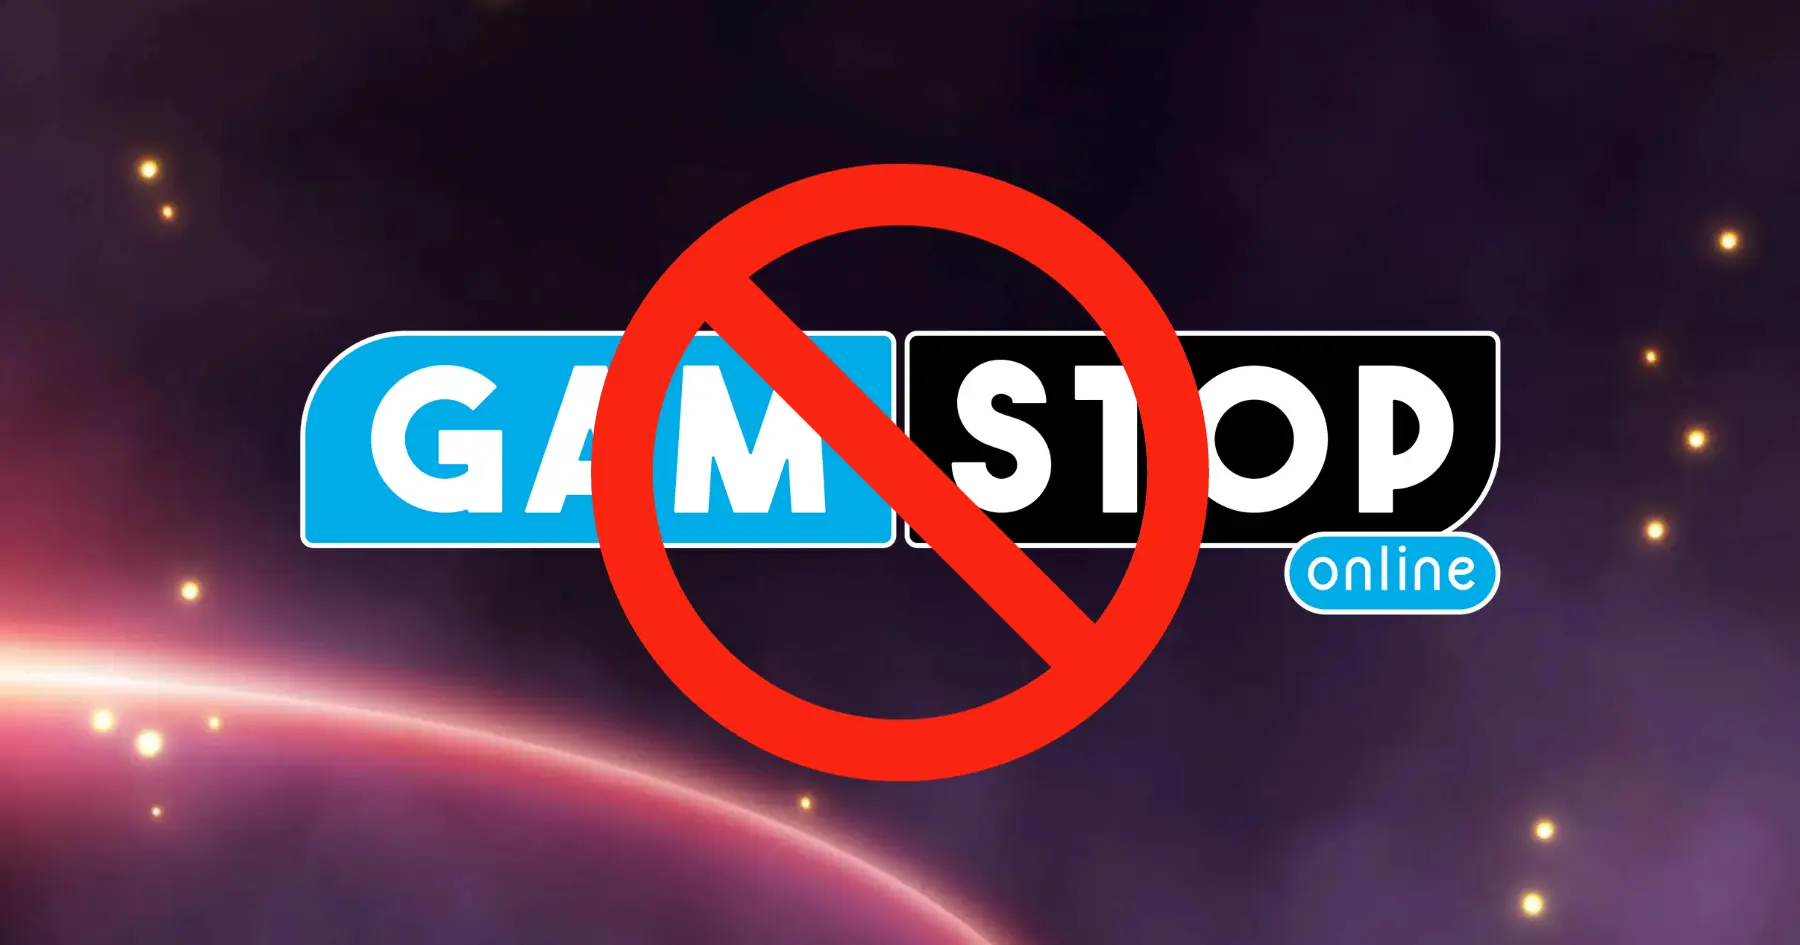 Introducing Starburst Slot Not on Gamstop